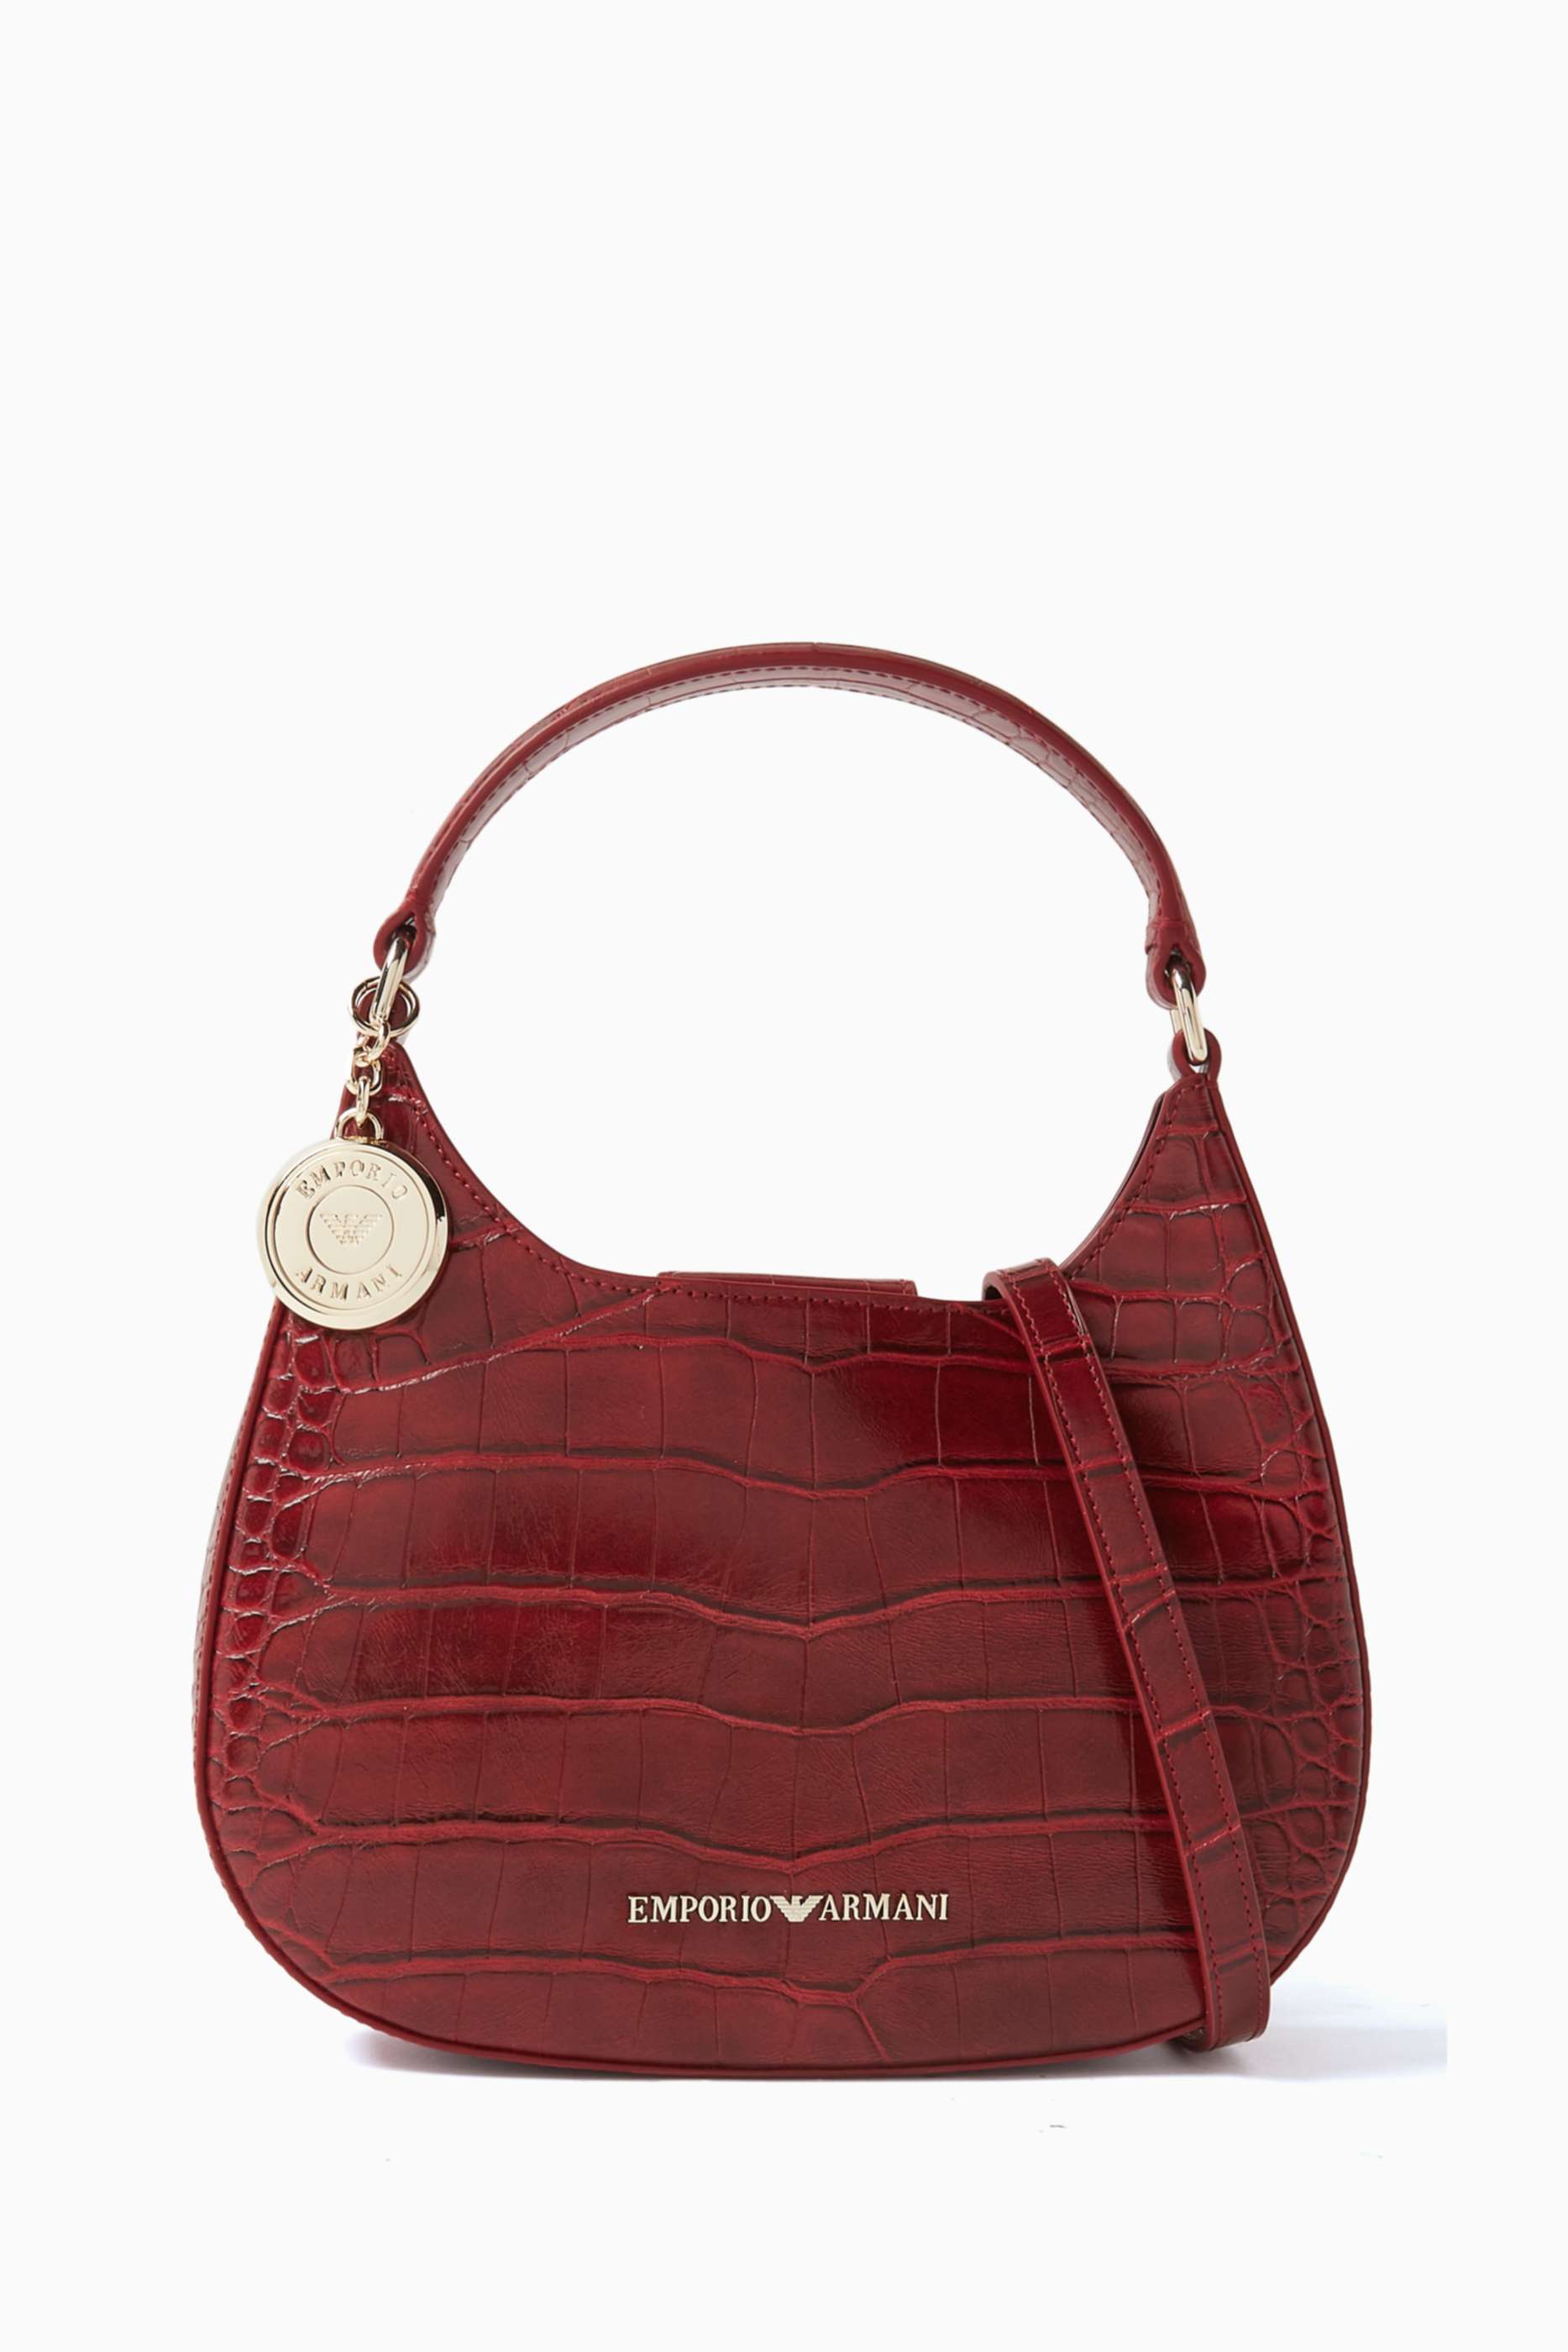 shop-emporio-armani-small-hobo-shoulder-bag-in-croco-printed-leather-for-women